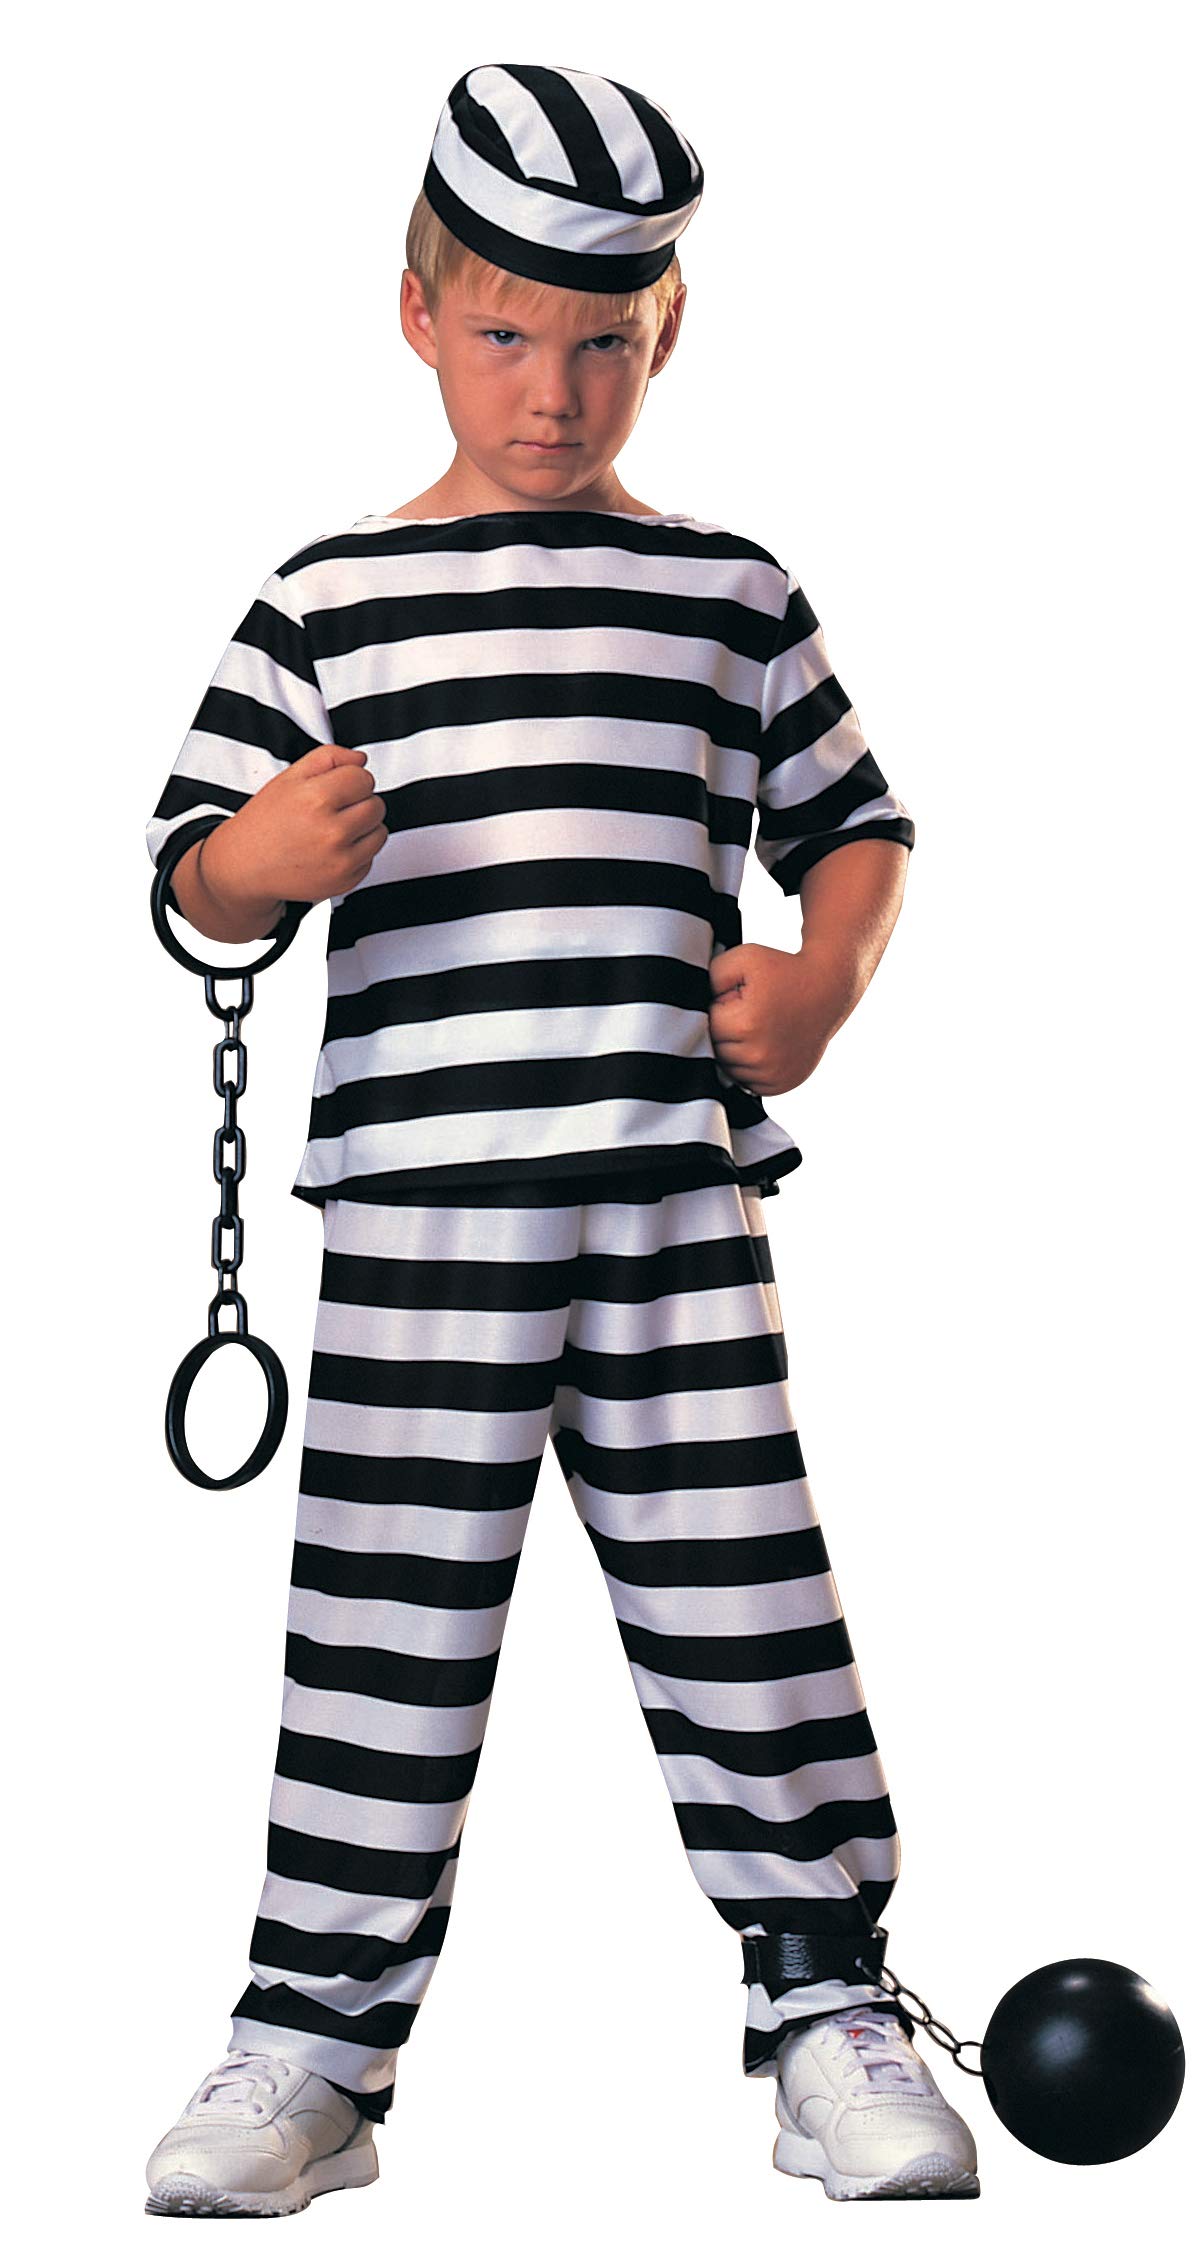 Rubies Haunted House Child Prisoner Costume, Medium, Black/White